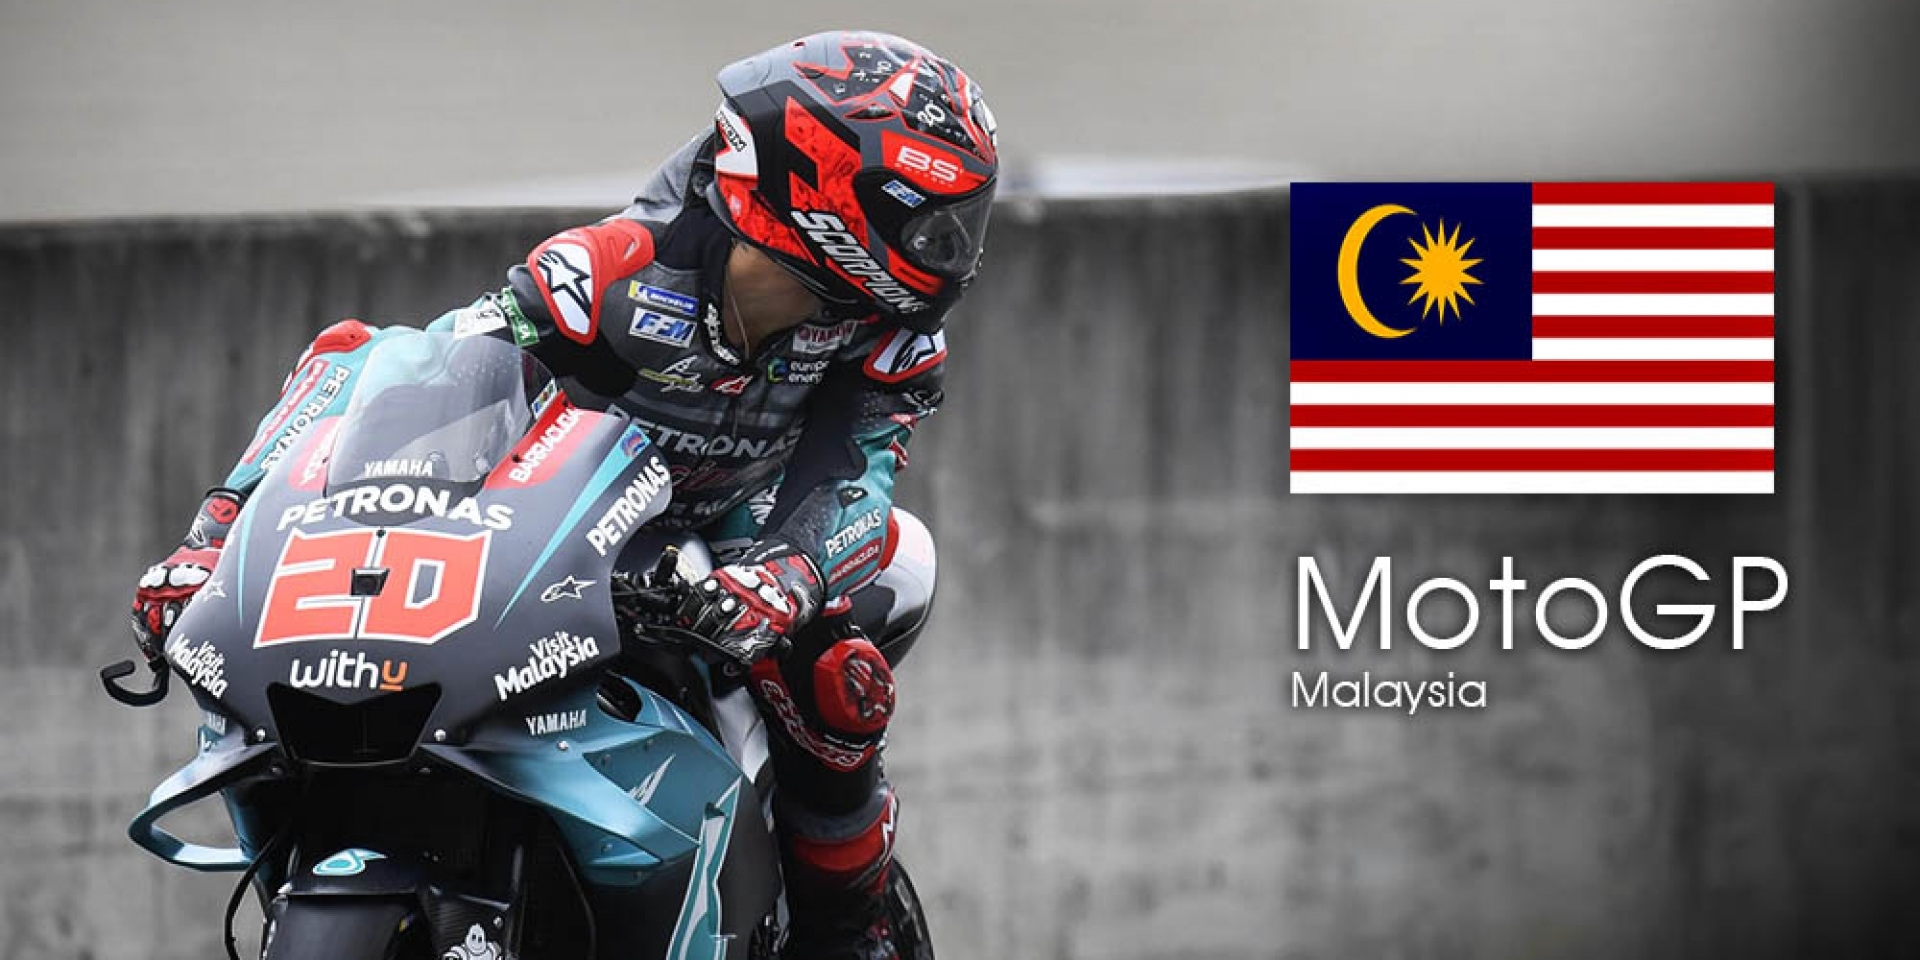 MotoGP 2019 馬來西亞站 轉播時間